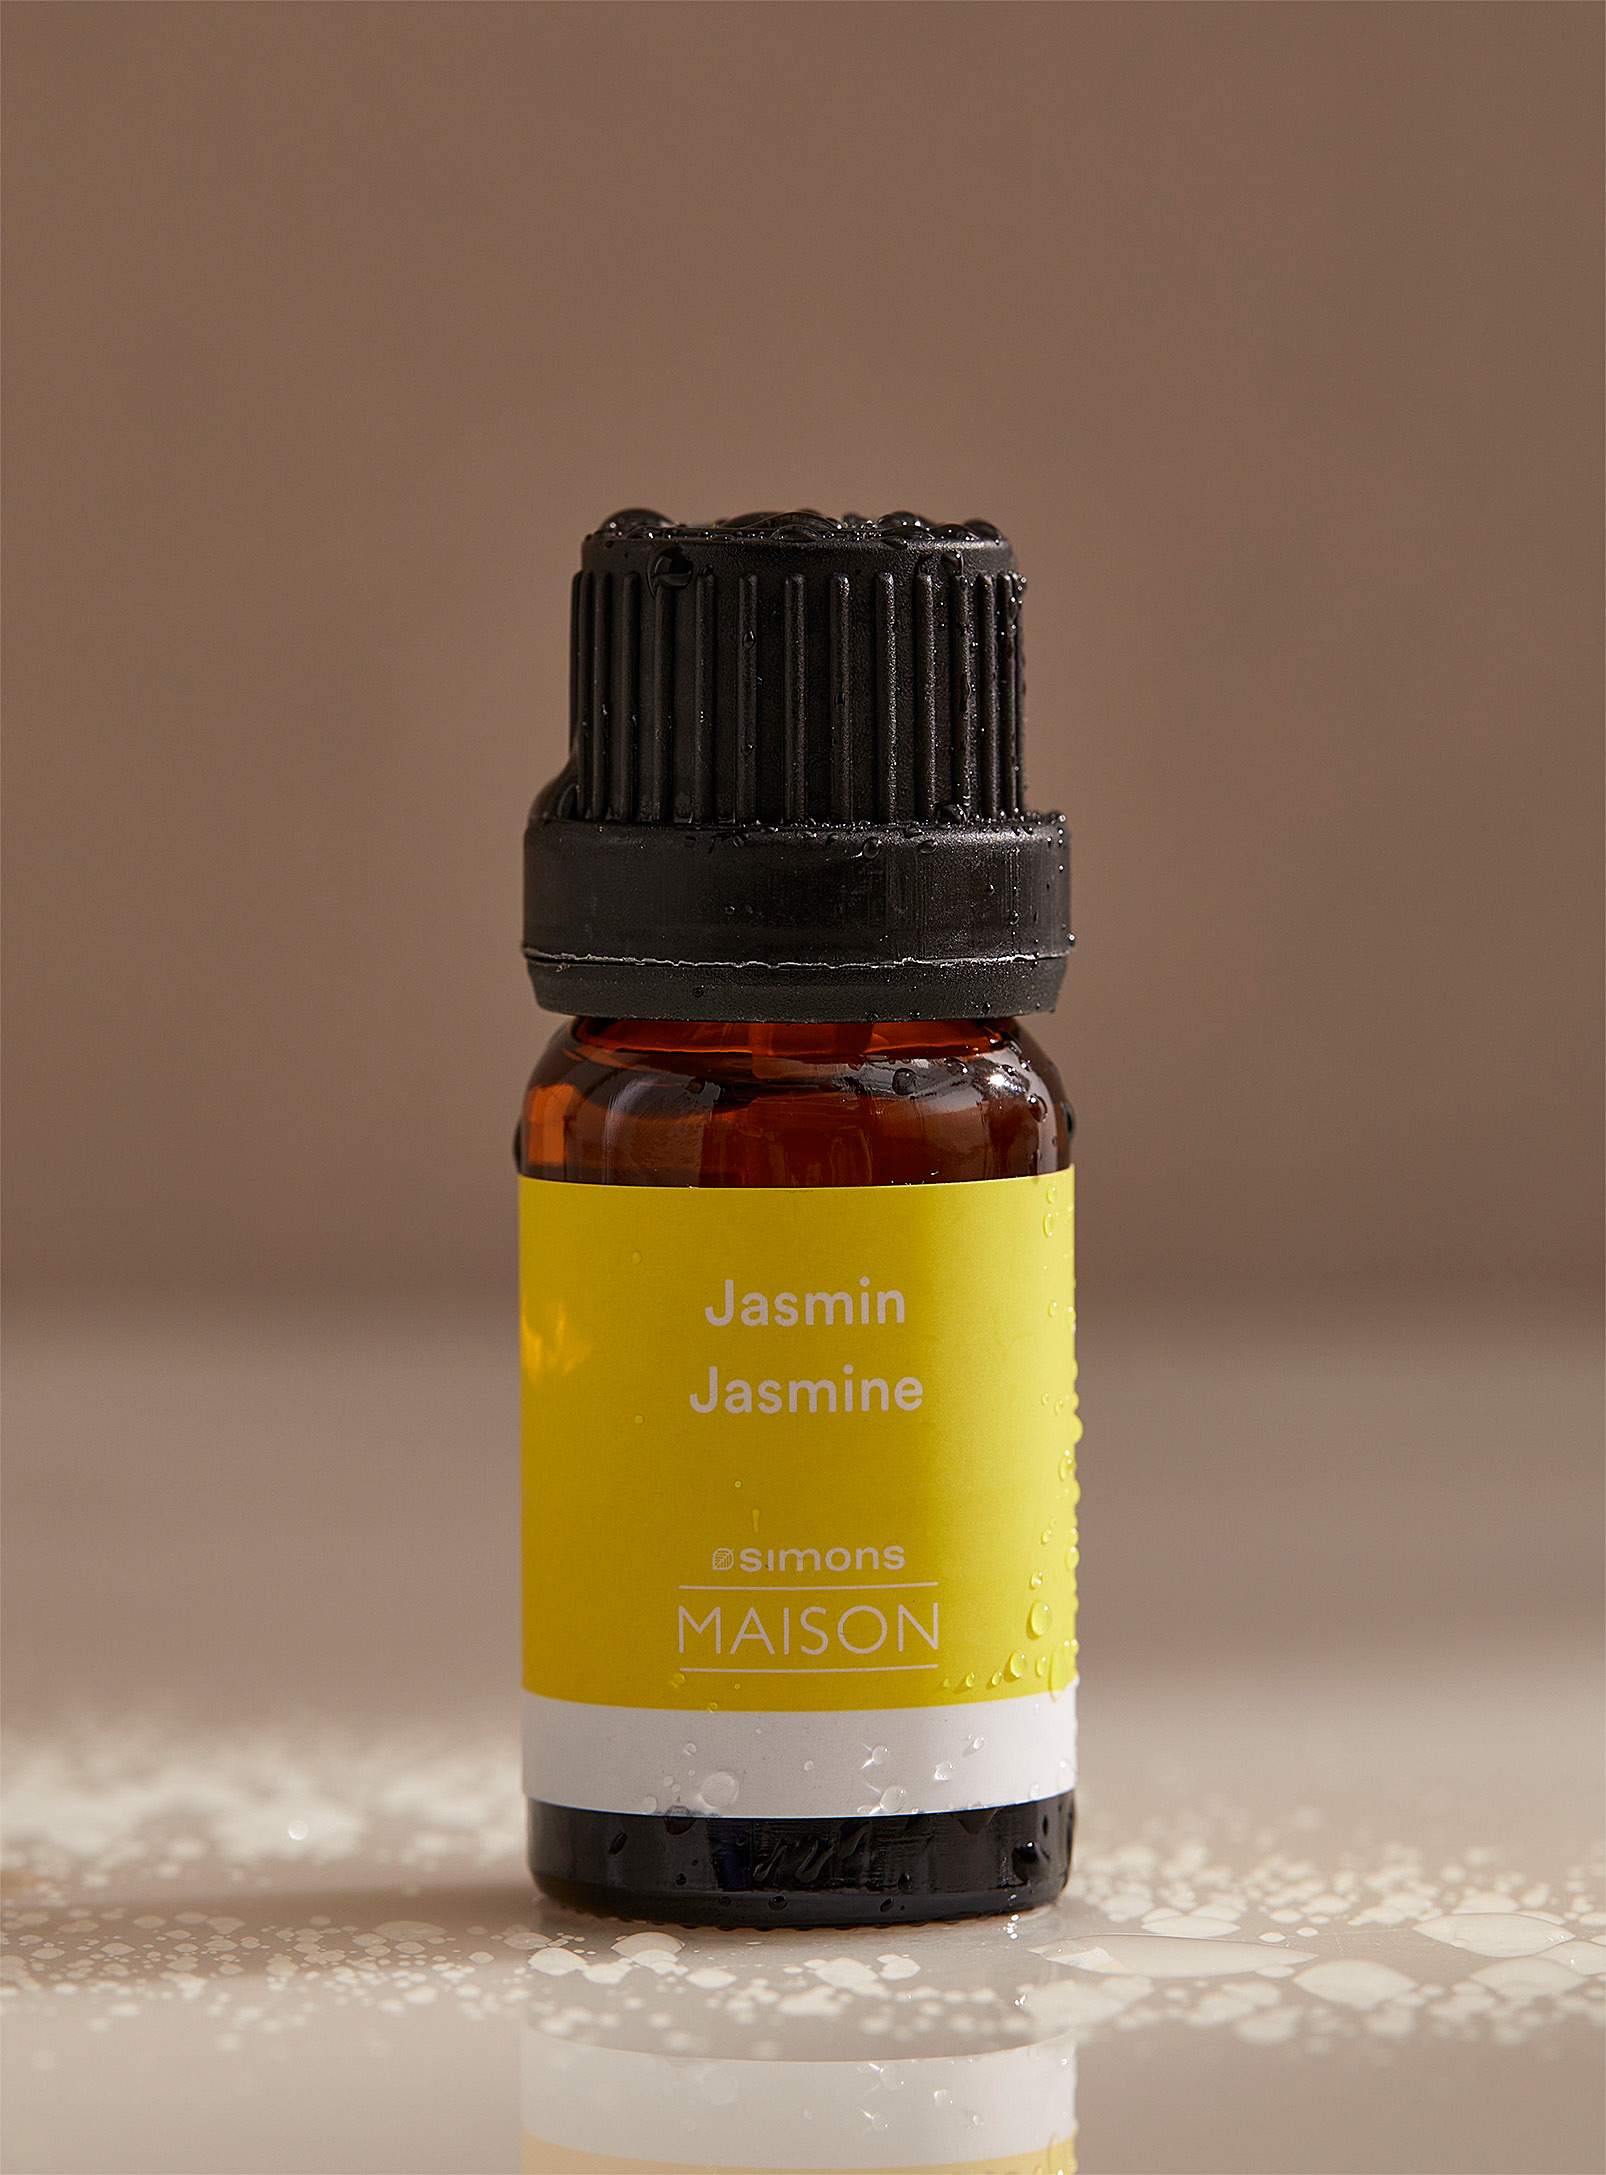 Simons Maison - Jasmine essential oil